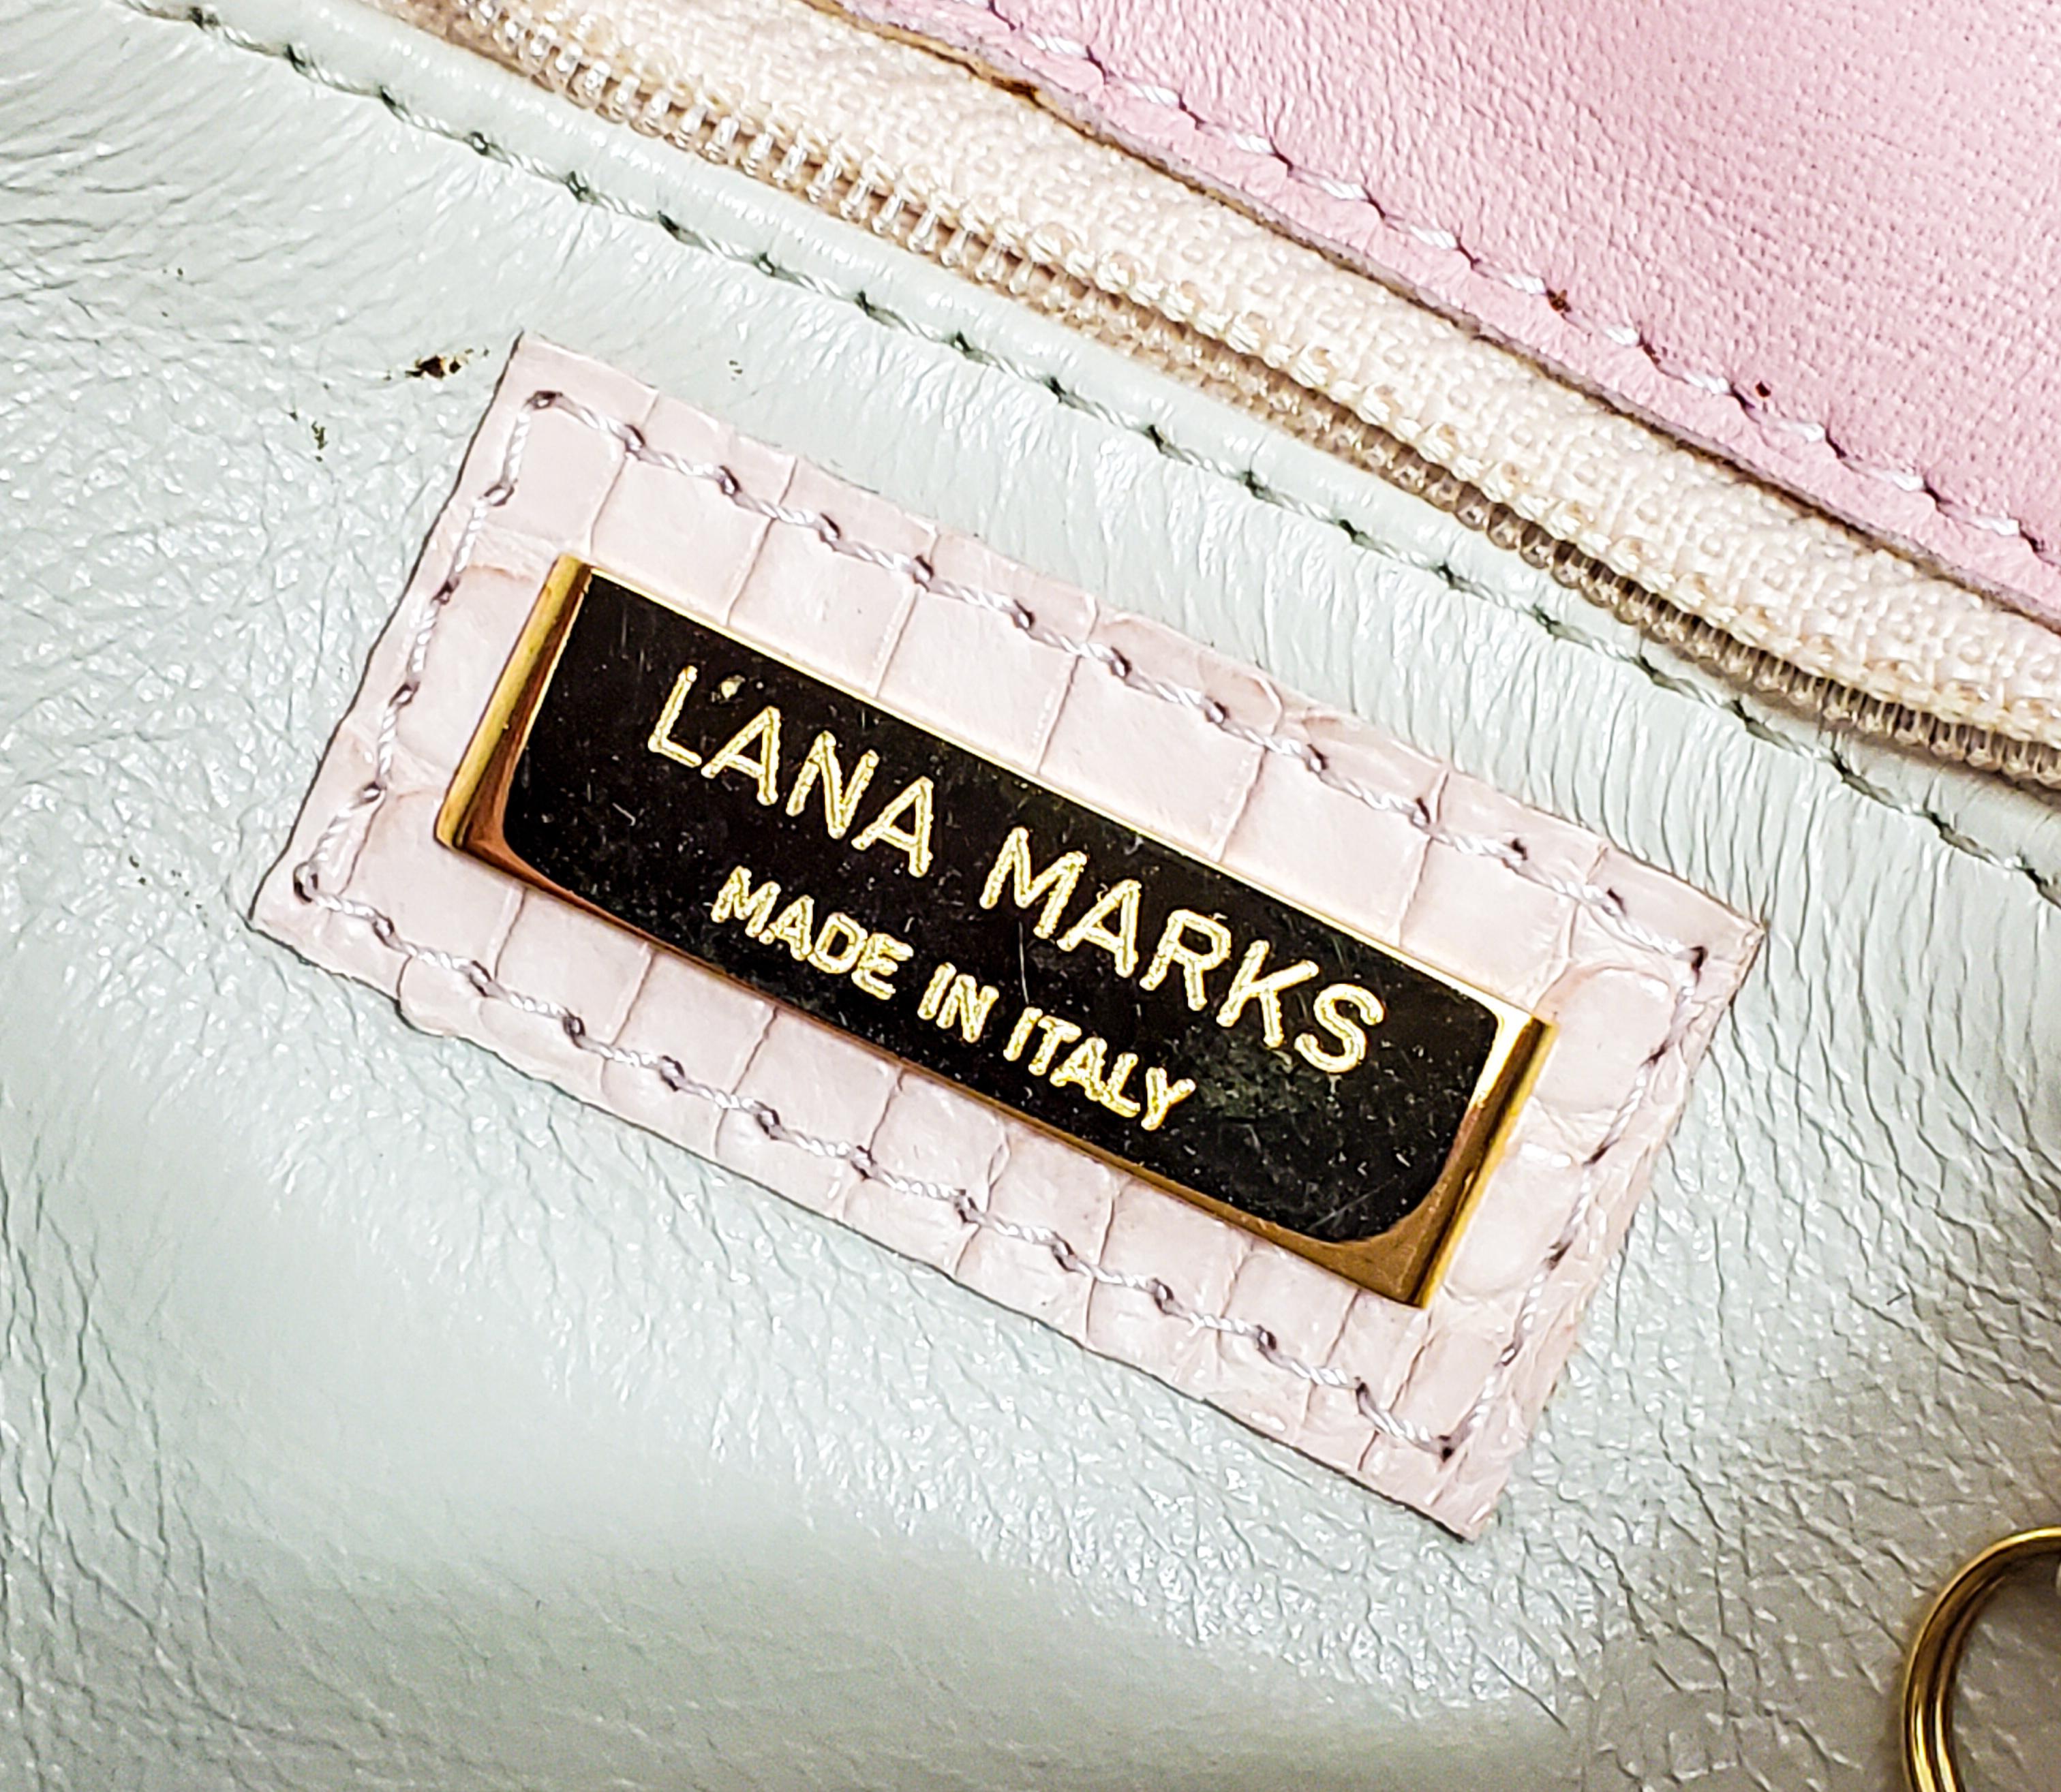 Beige Lana Marks Crocodile Blush Pink Clutch or Crossbody Handbag For Sale